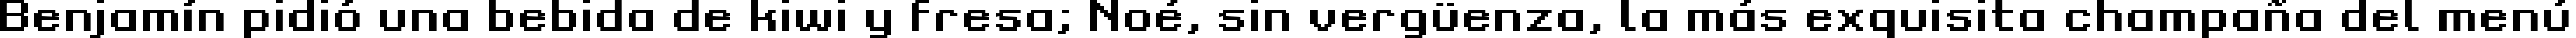 Пример написания шрифтом Grixel Kyrou 9 Regular Bold Xtnd текста на испанском